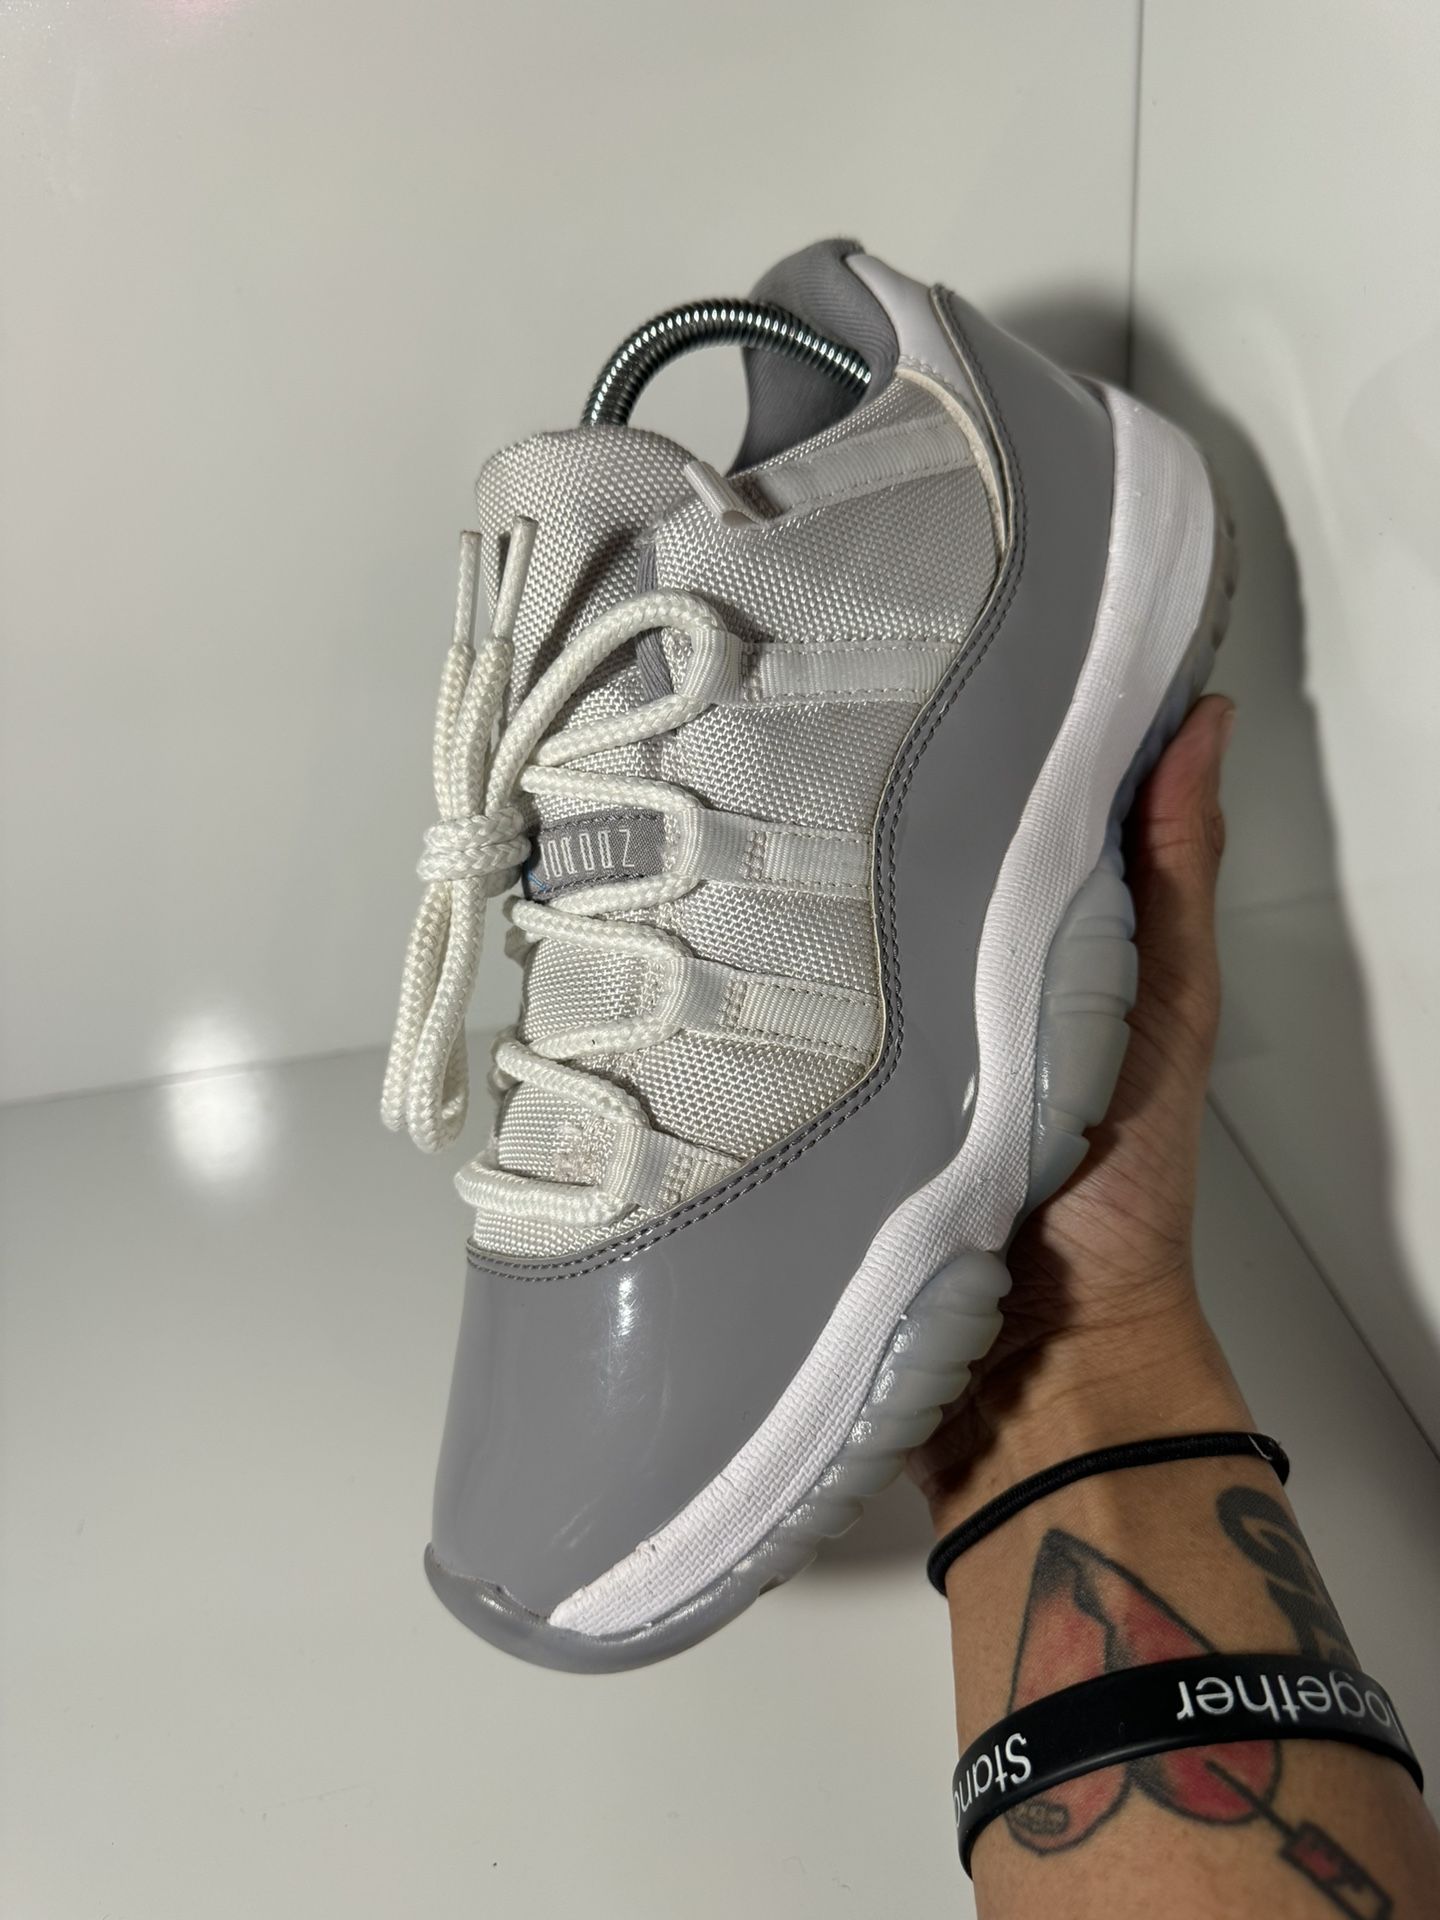 Air Jordan 11 Low “Cement Grey” Size 8